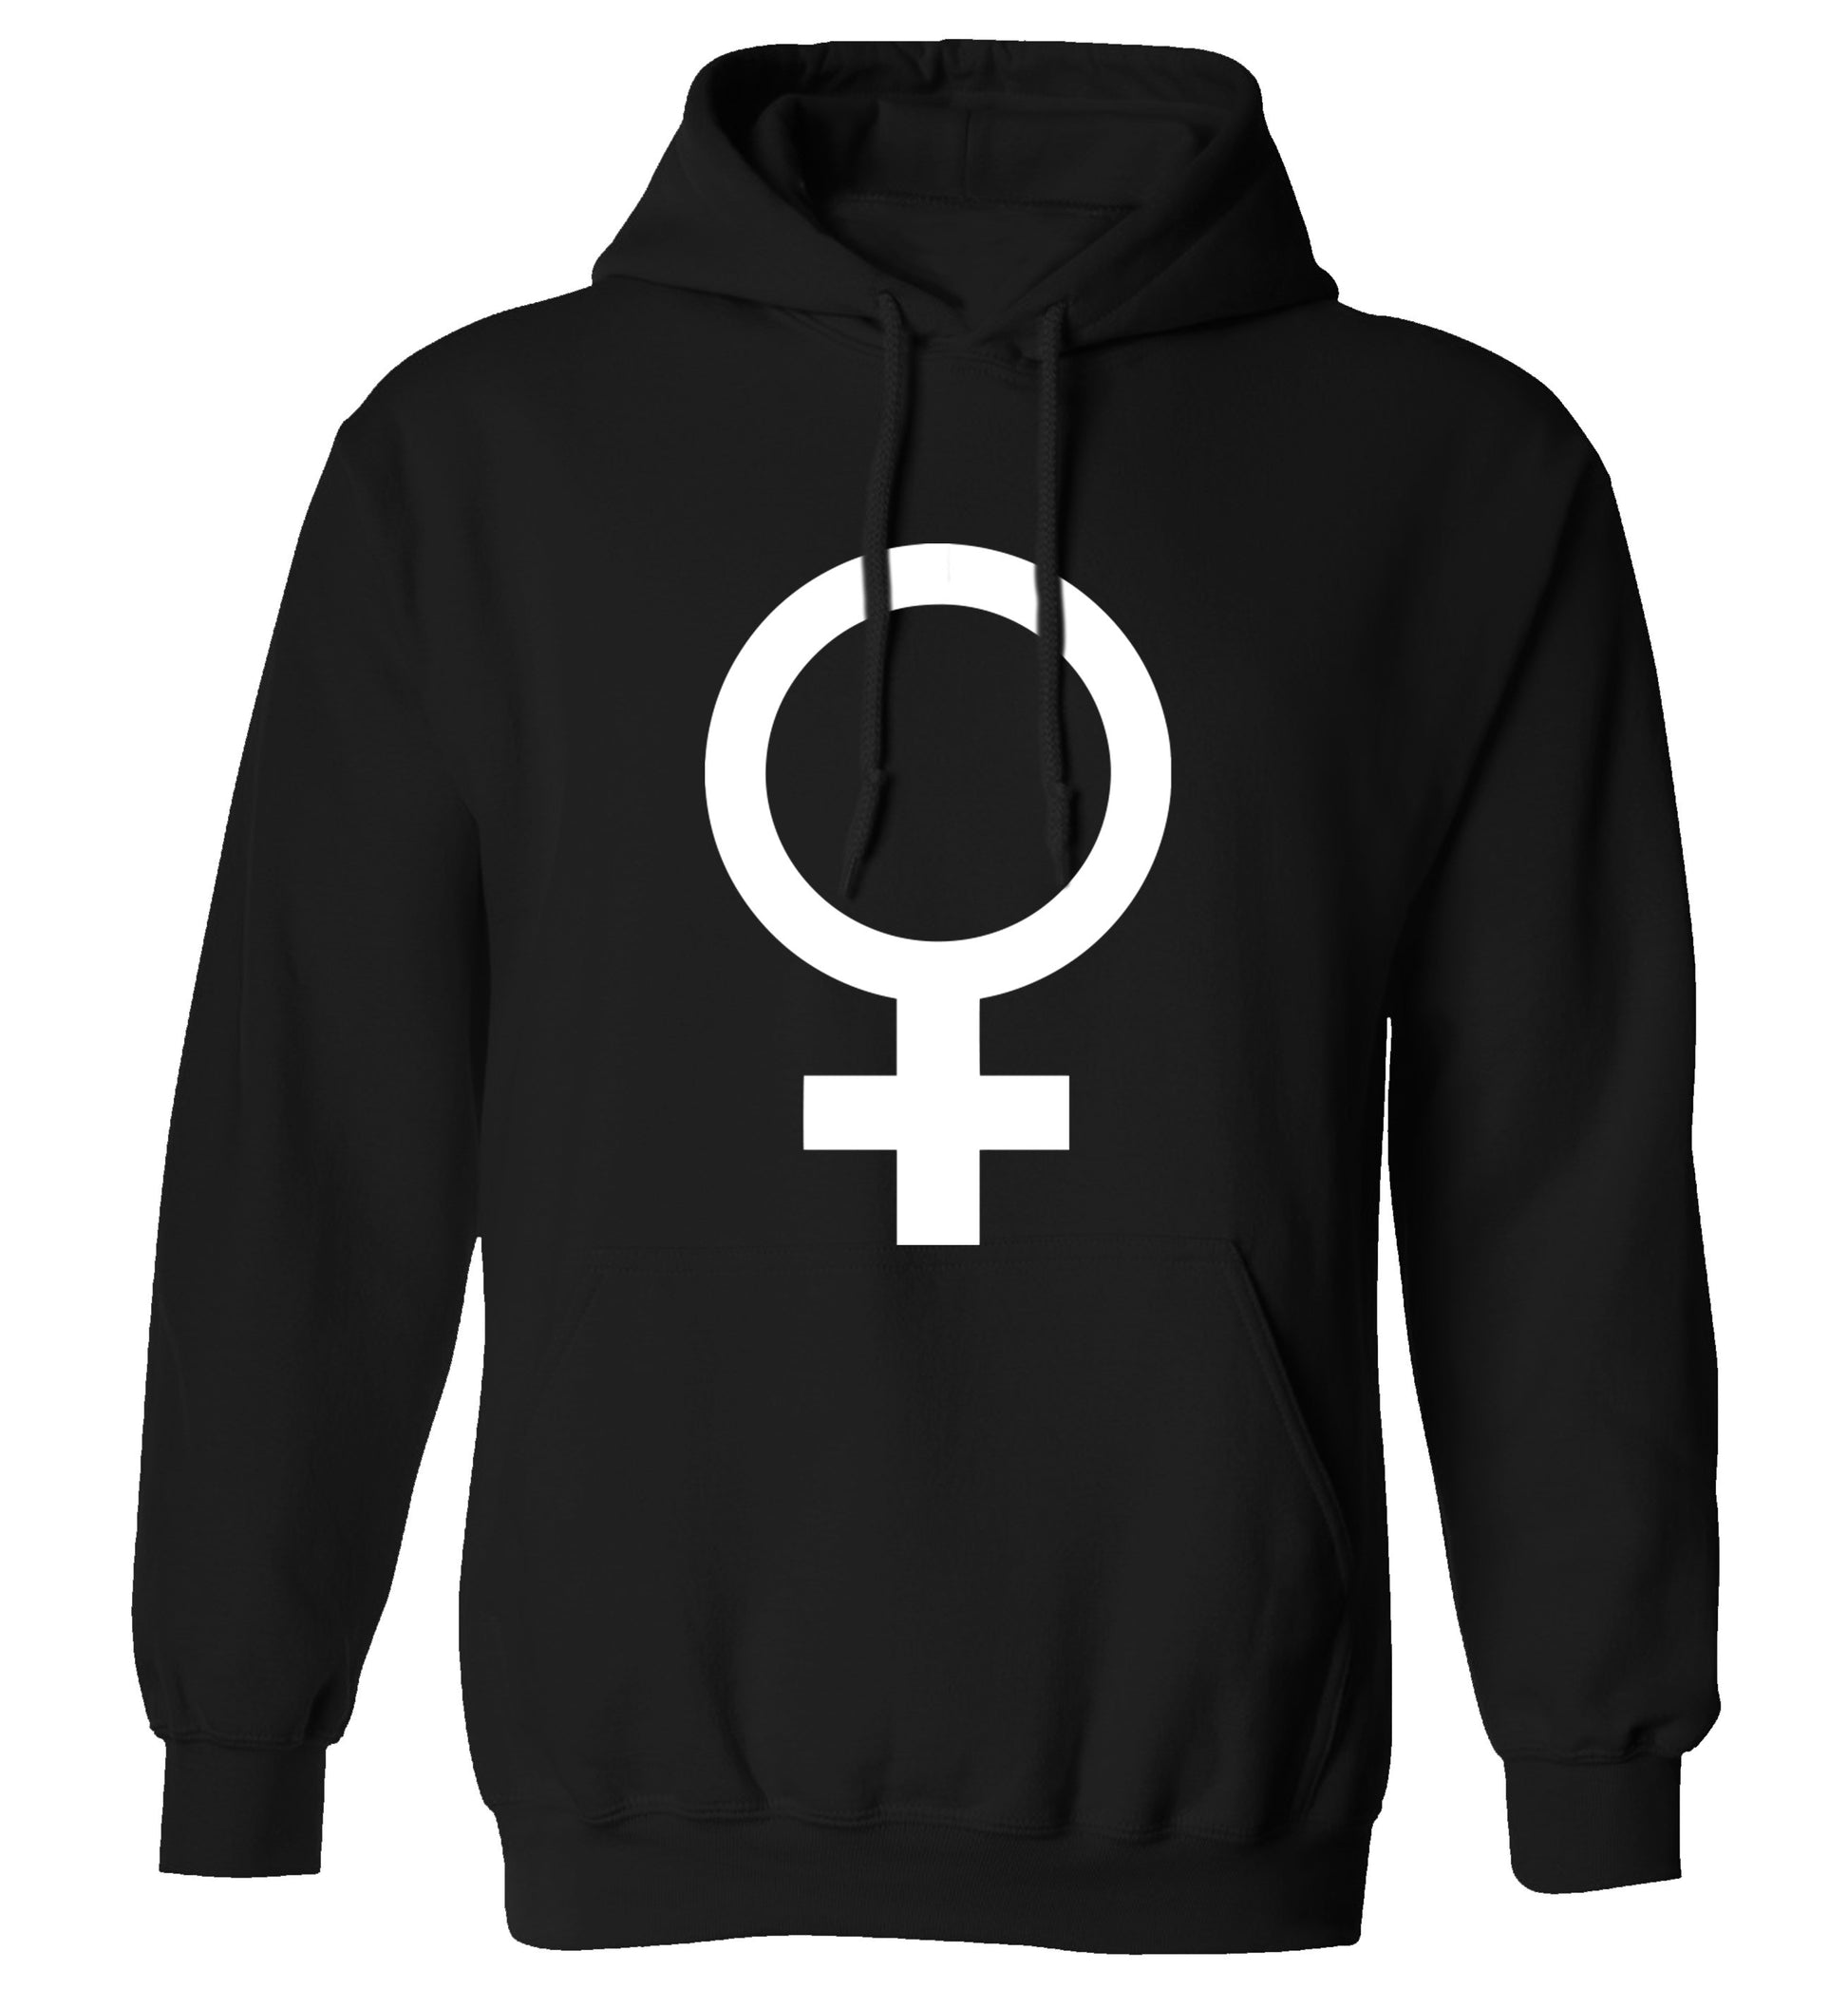 Female symbol large adults unisex black hoodie 2XL